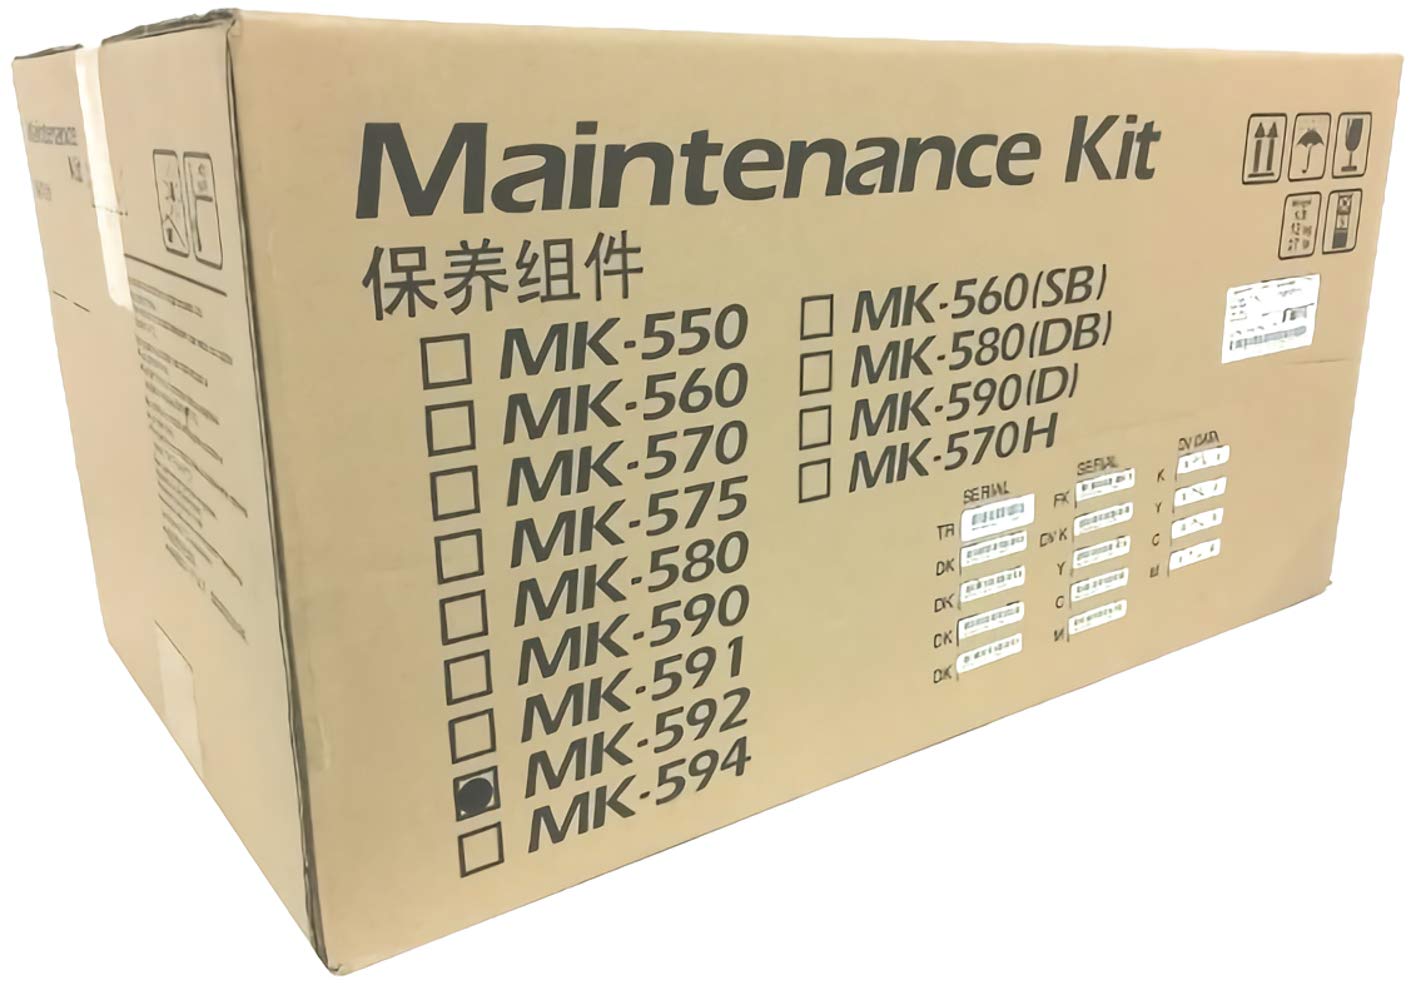 Kyocera 1702KV7US0 Model MK-592 Printer Maintenance Kit - MK-592 499.99